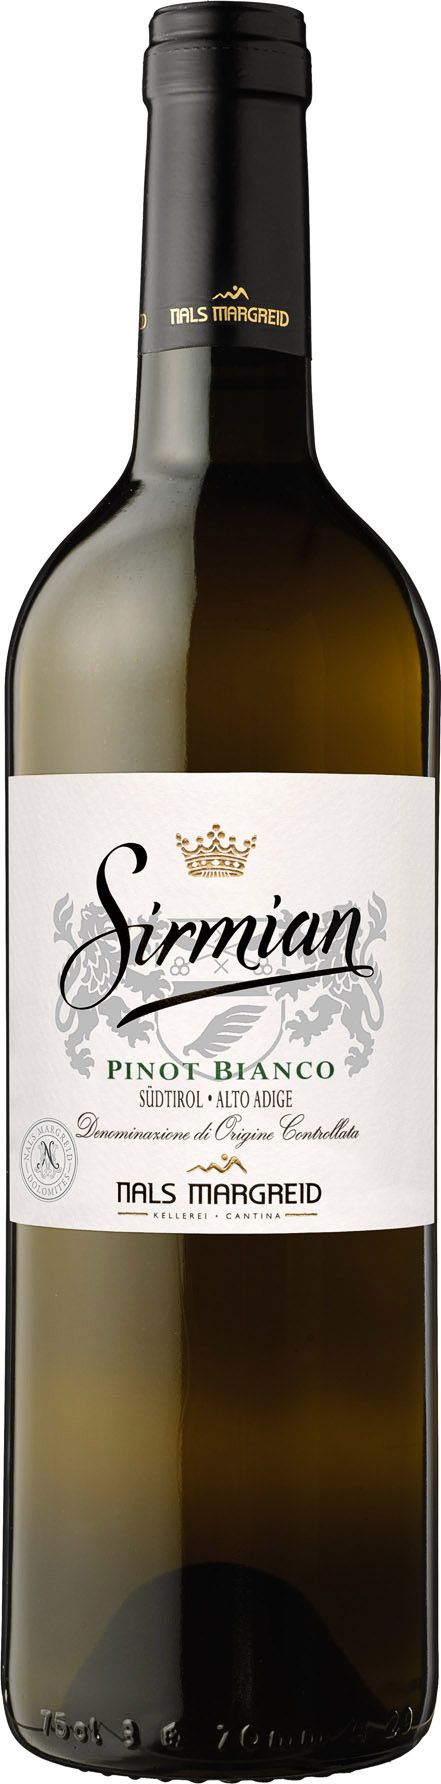 Nals Margreid, Sirmian Pinot Blanco, 2012